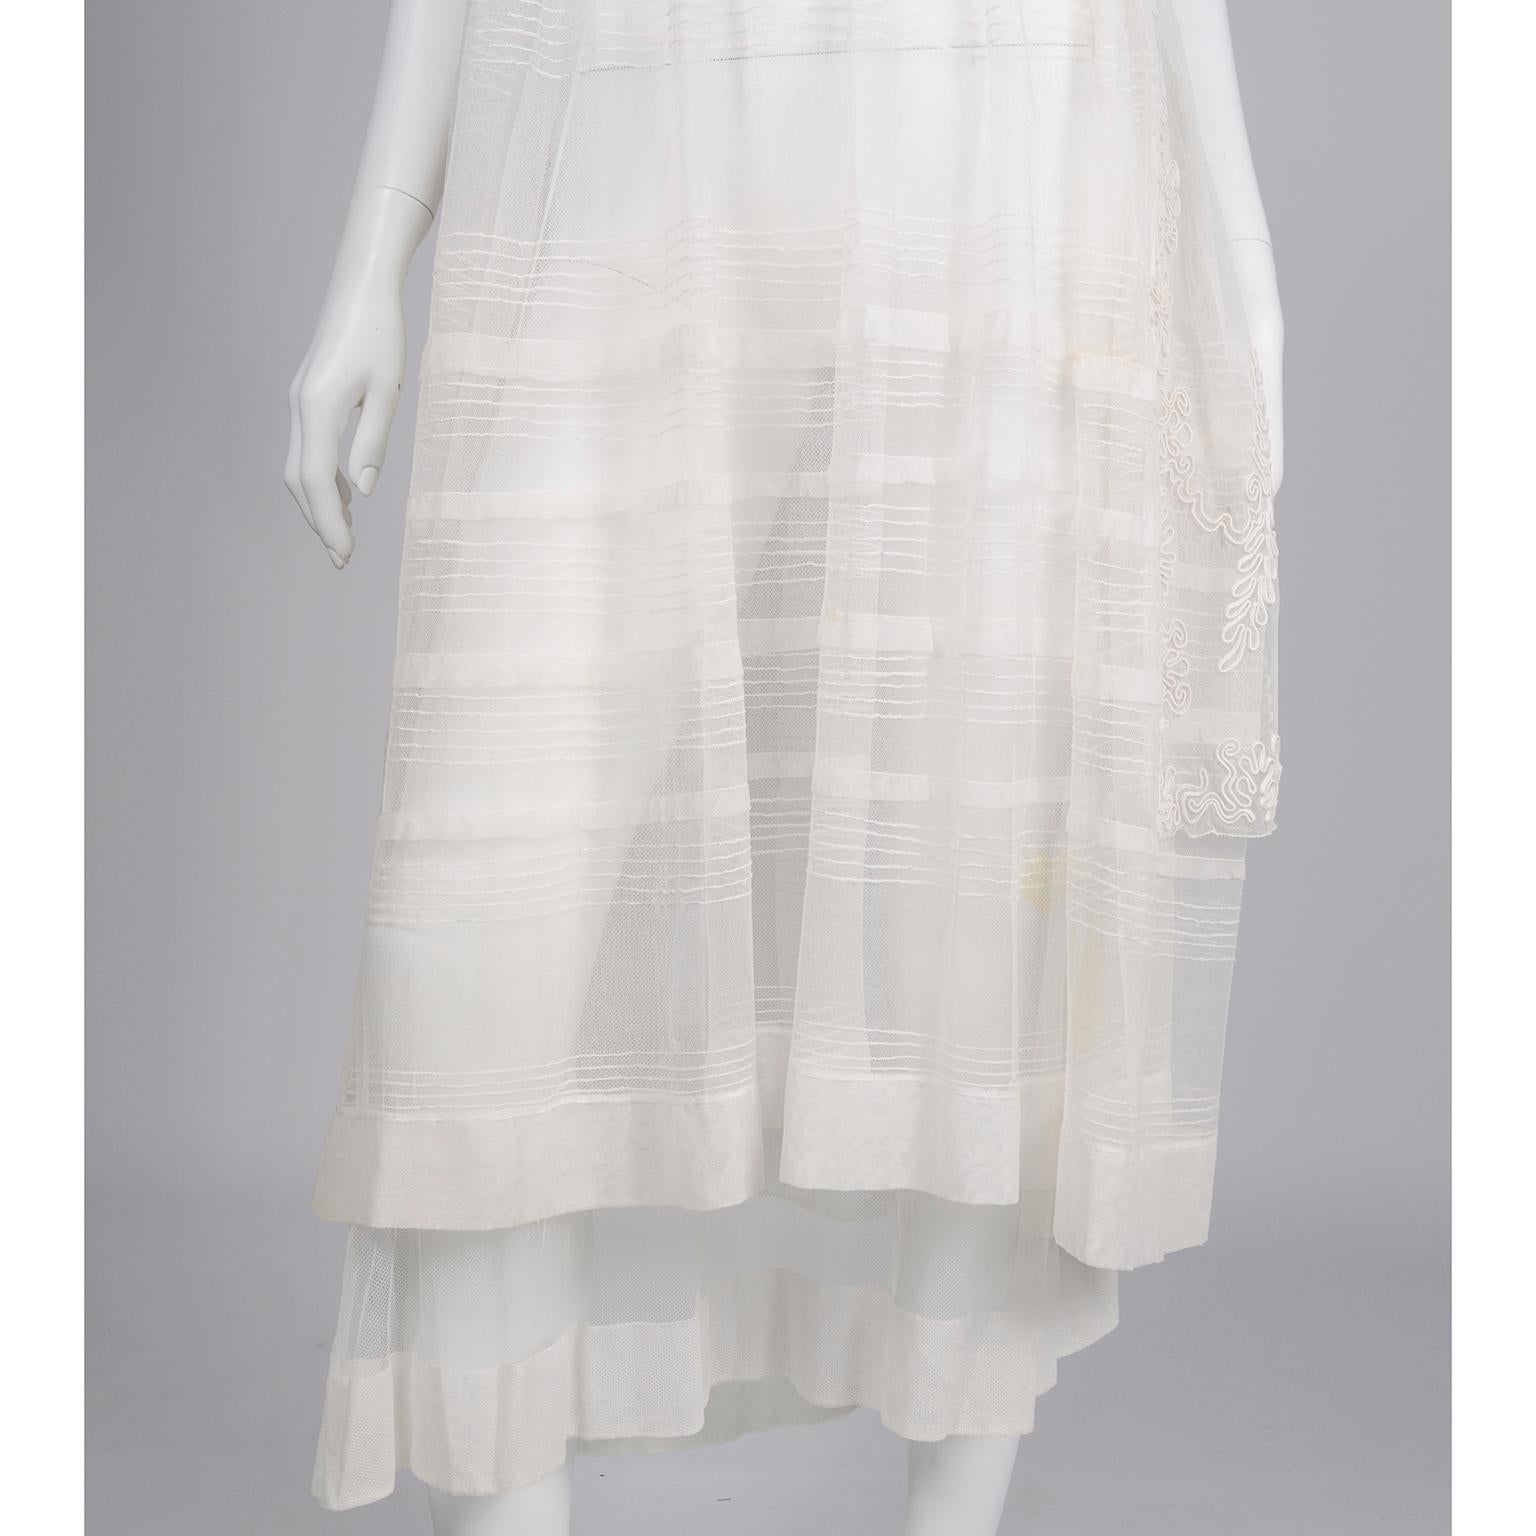 Antique Edwardian 1910s Vintage Ivory Net Tulle Dress W Soutache Embroidery Trim For Sale 2